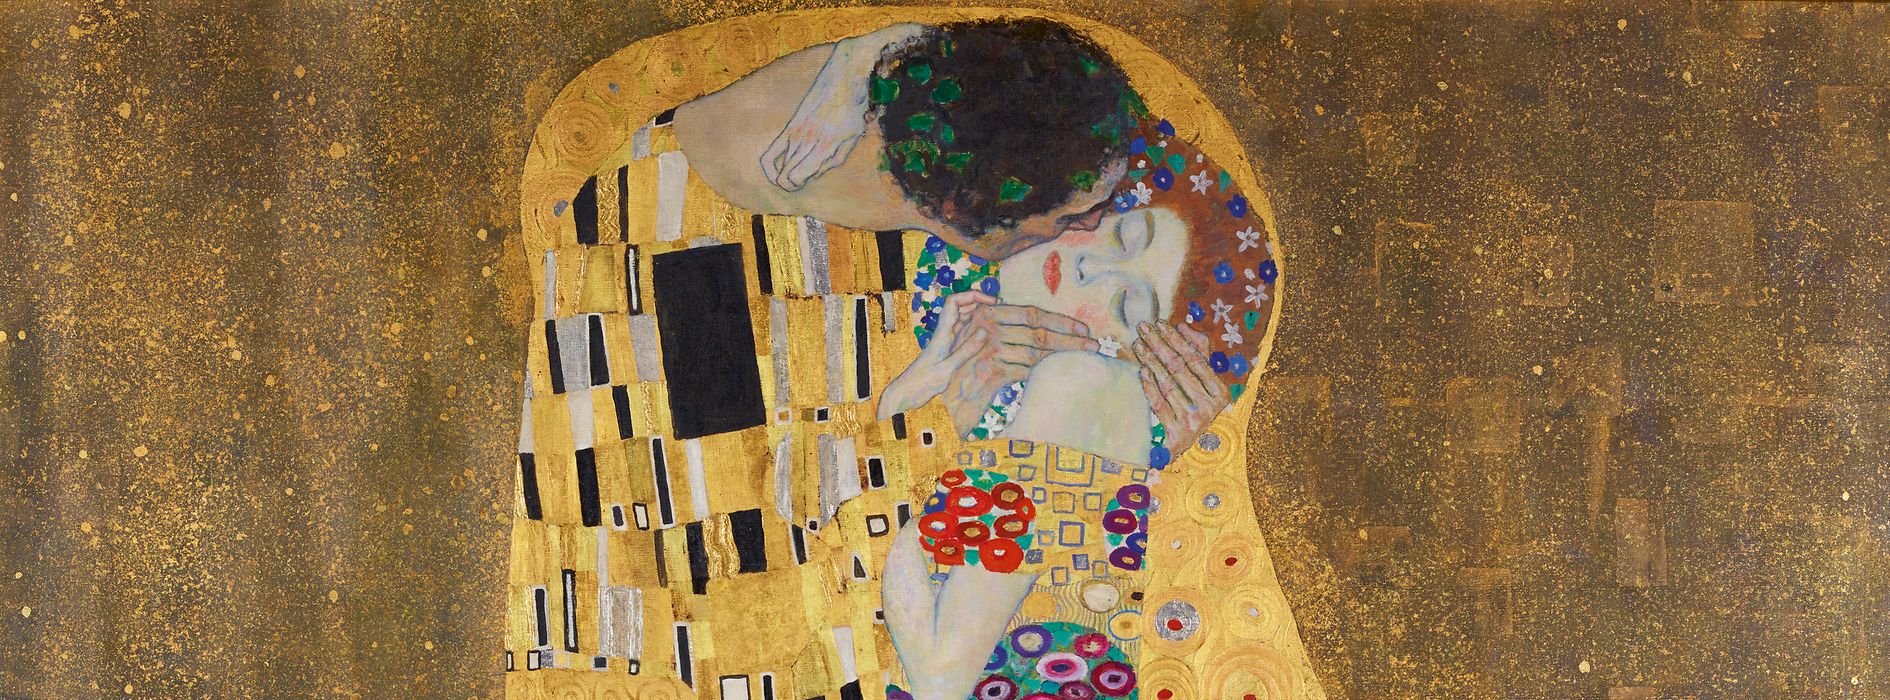 Painting "The Kiss" by Gustav Klimt